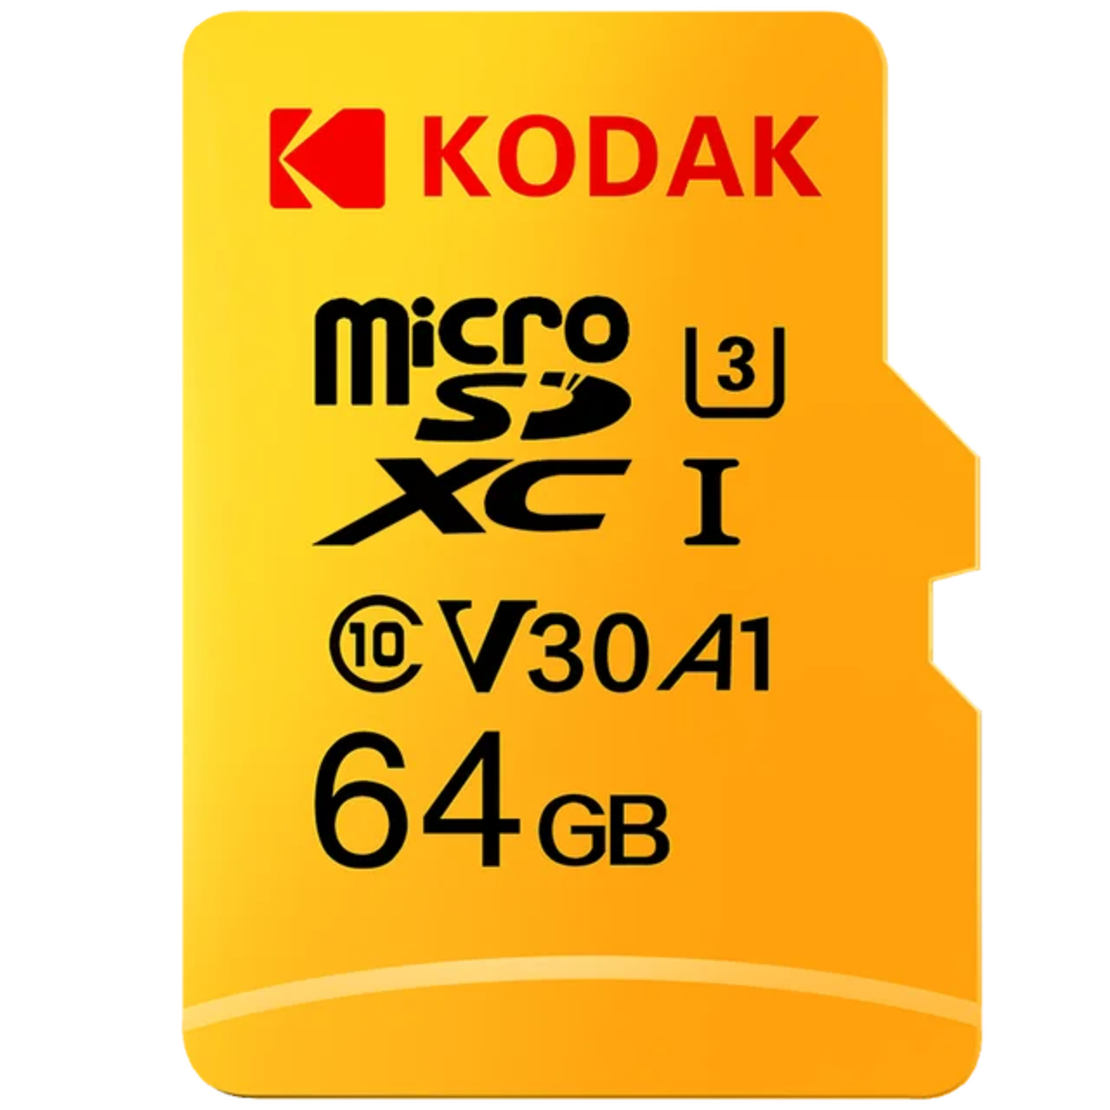 כרטיס זכרון MicroSD 64GB